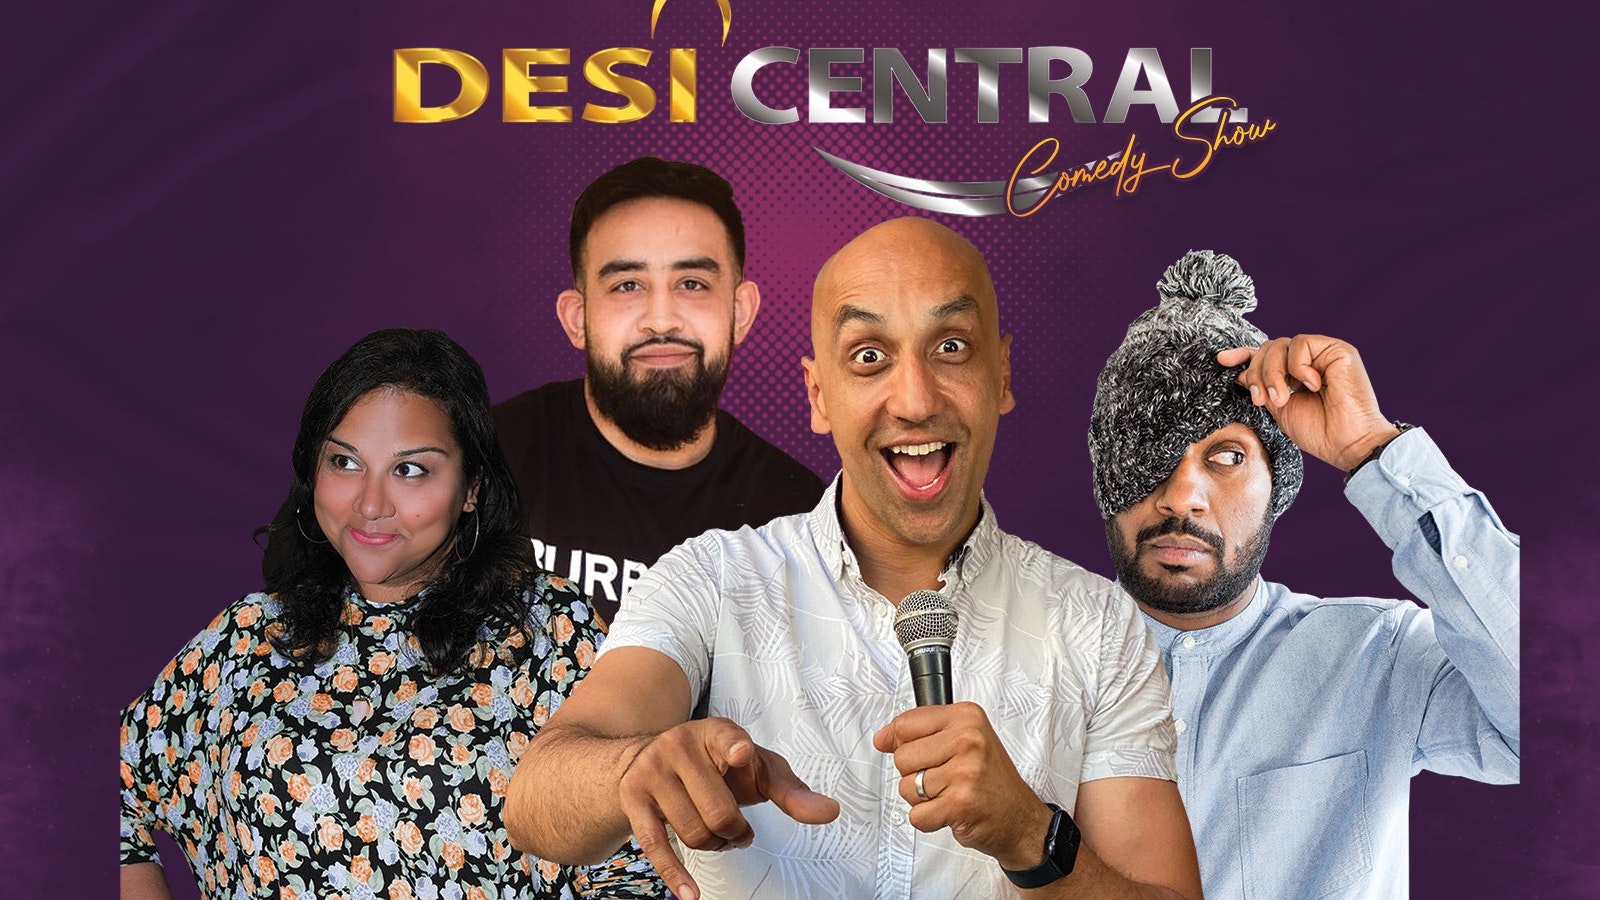 Desi Central Comedy Show – Holborn